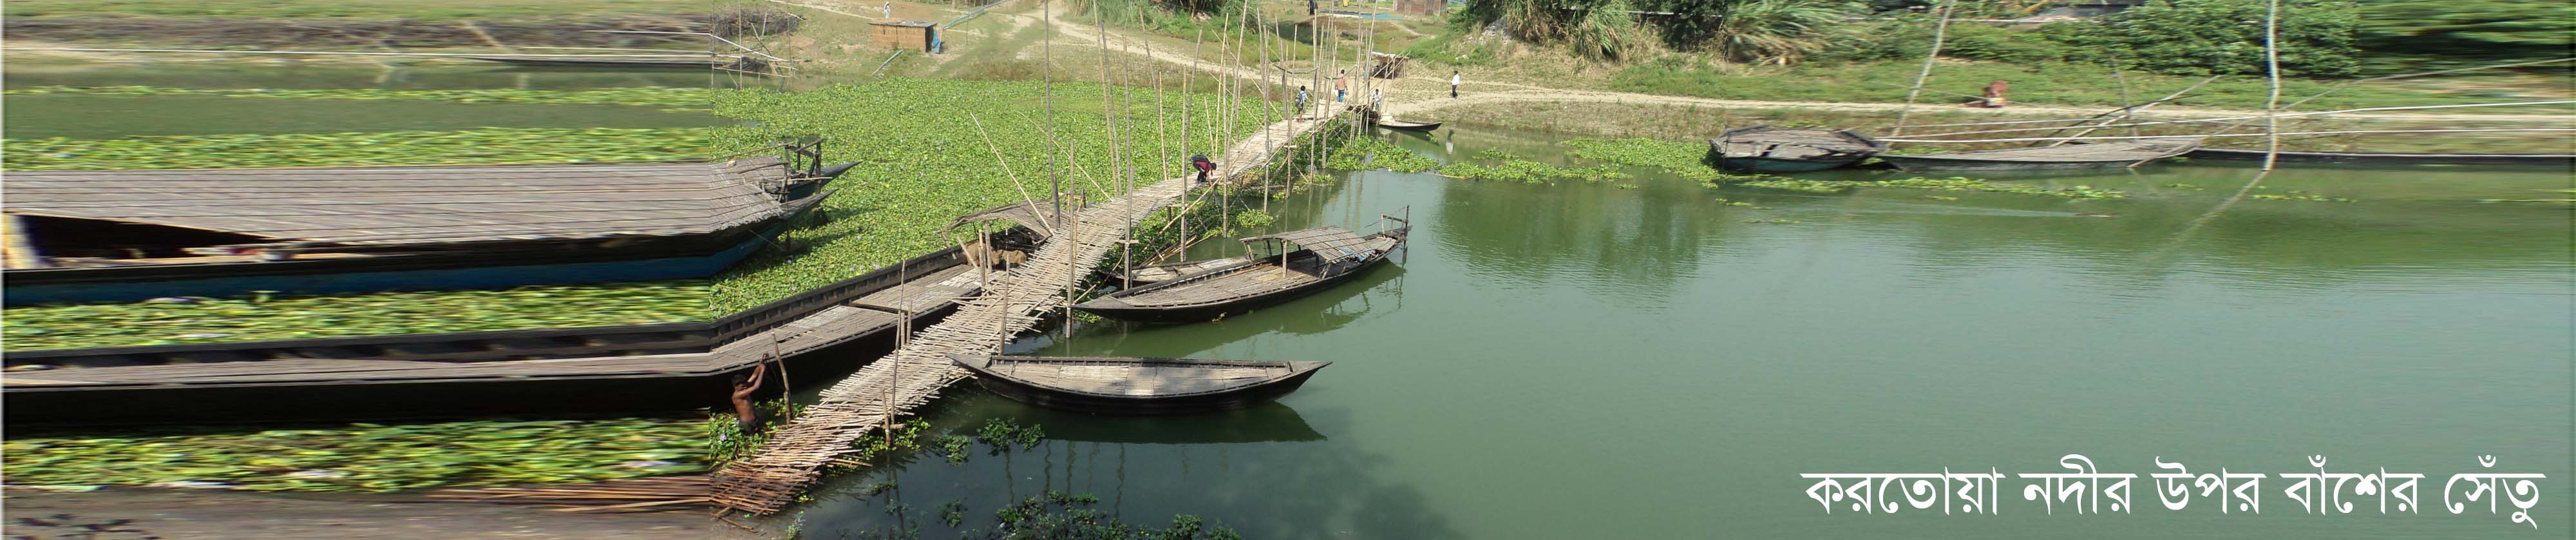 Bamboo bridge on the Karatoya river